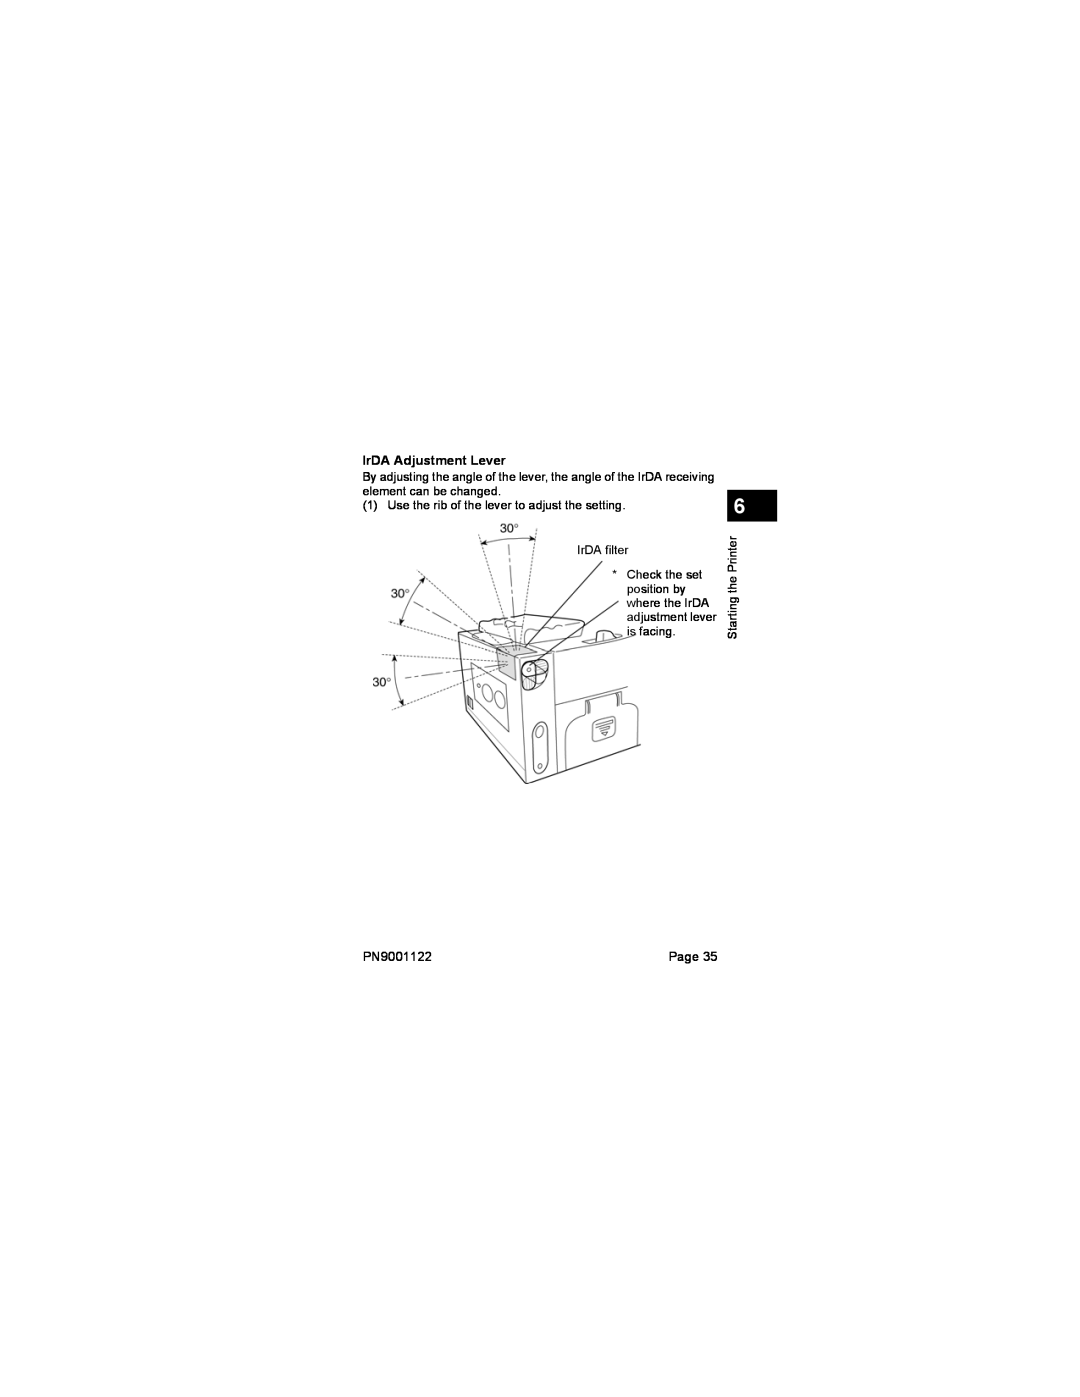 SATO MB200 manual IrDA Adjustment Lever, PN9001122 